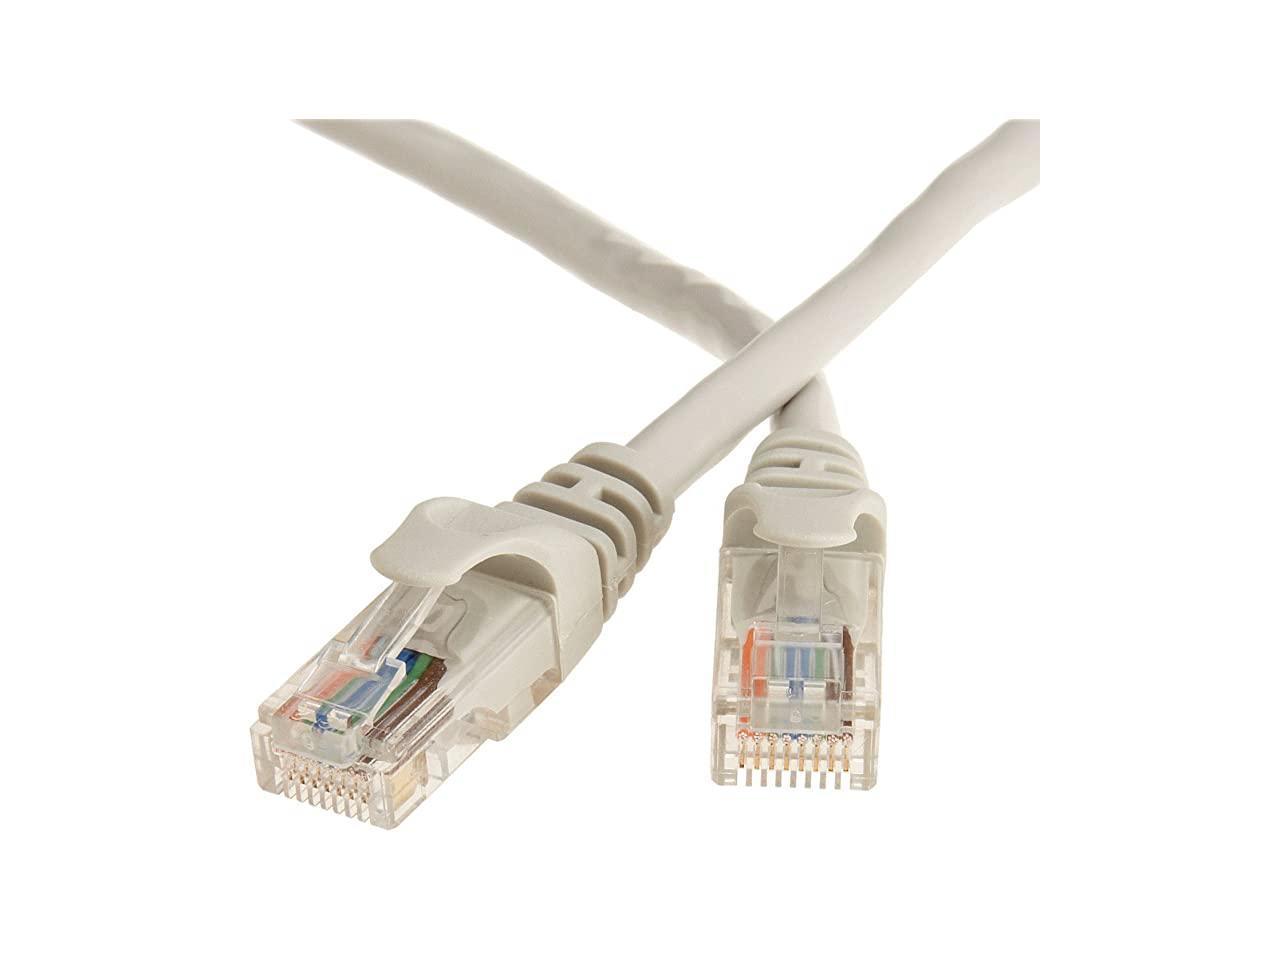 15.2 Meters 50 Feet Basics RJ45 Cat-5e Network Ethernet Cable 